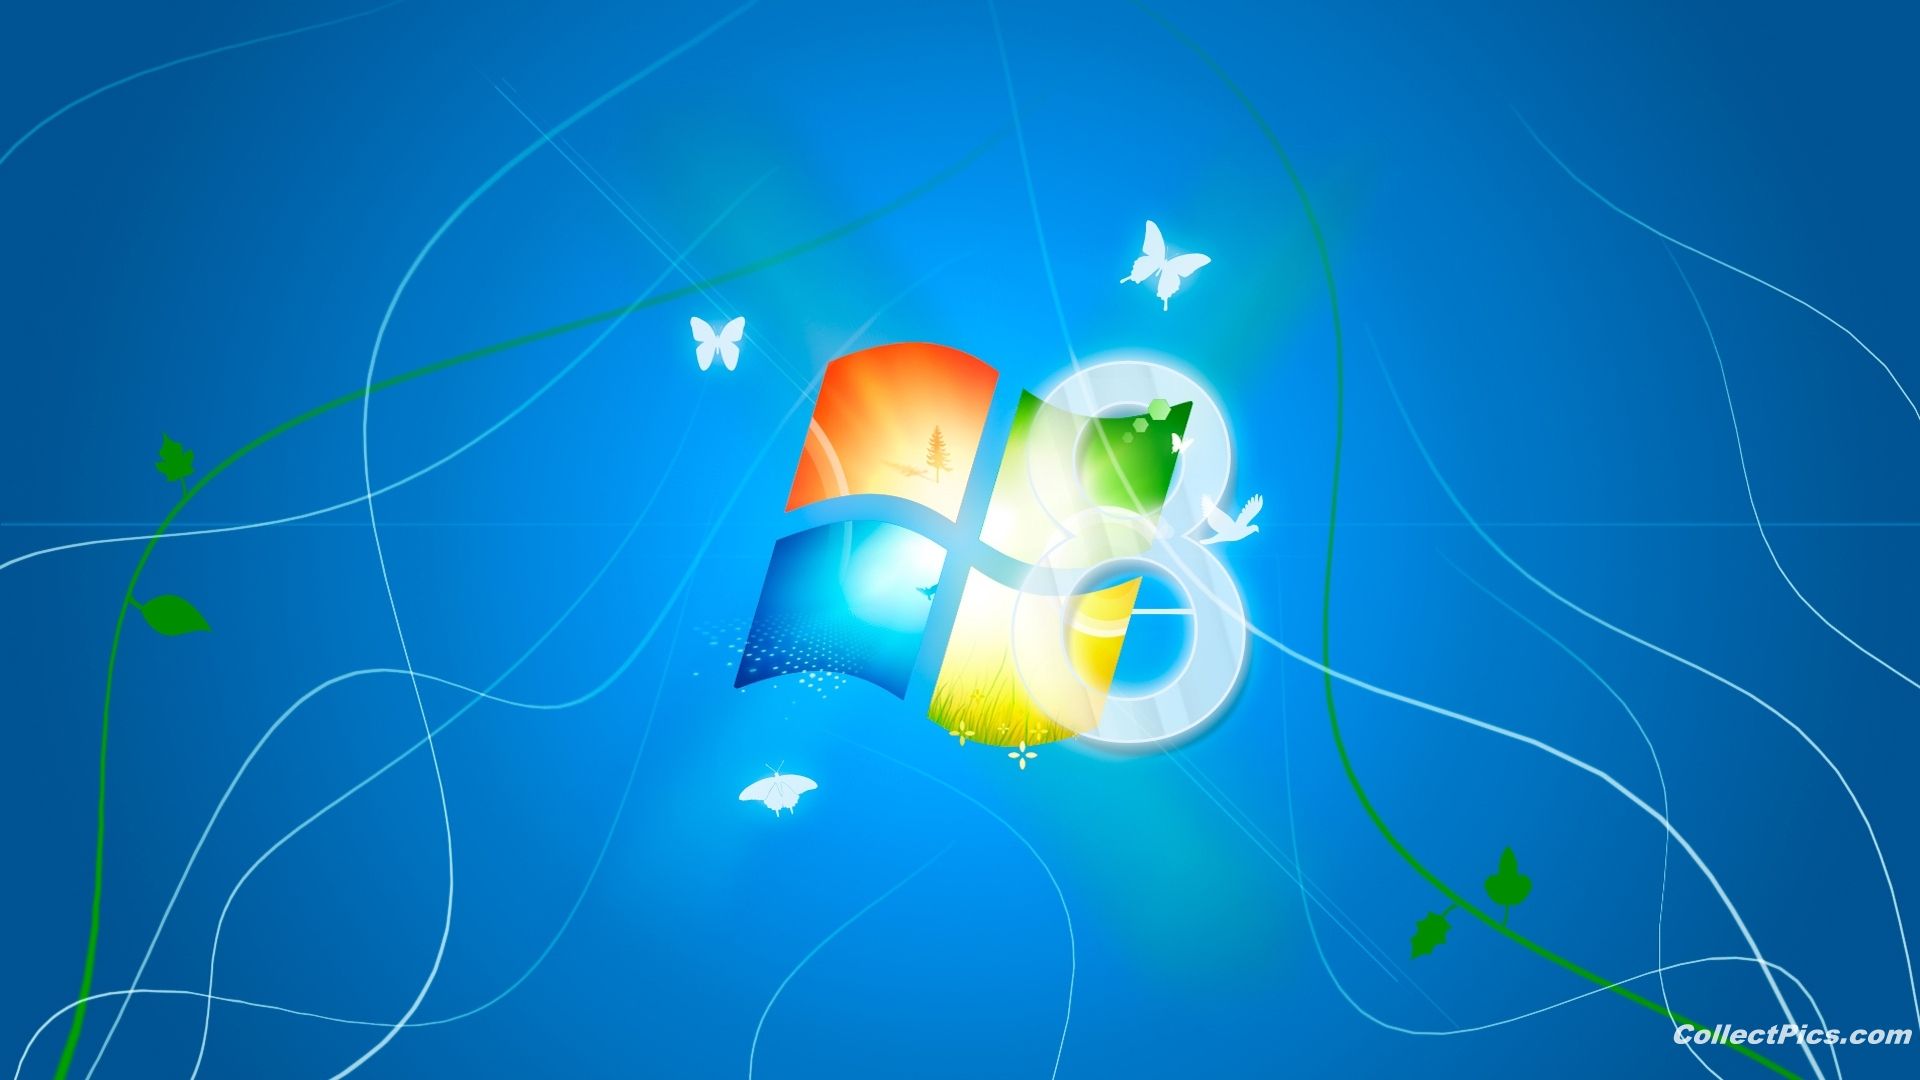 Windows 8 Alive Wallpaper HD 1920x1080